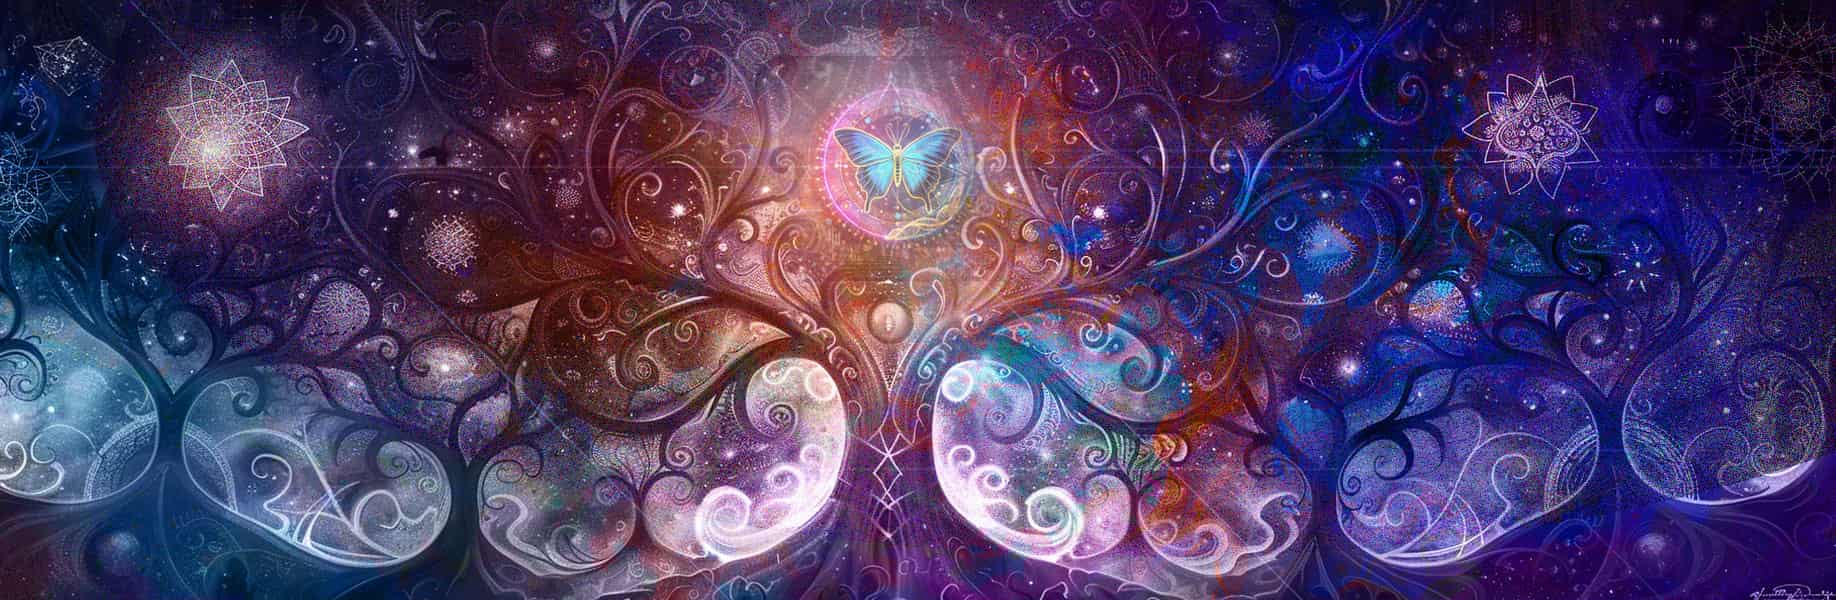 The Kosmic Tree of Life: A Framework for the Era of Wisdom